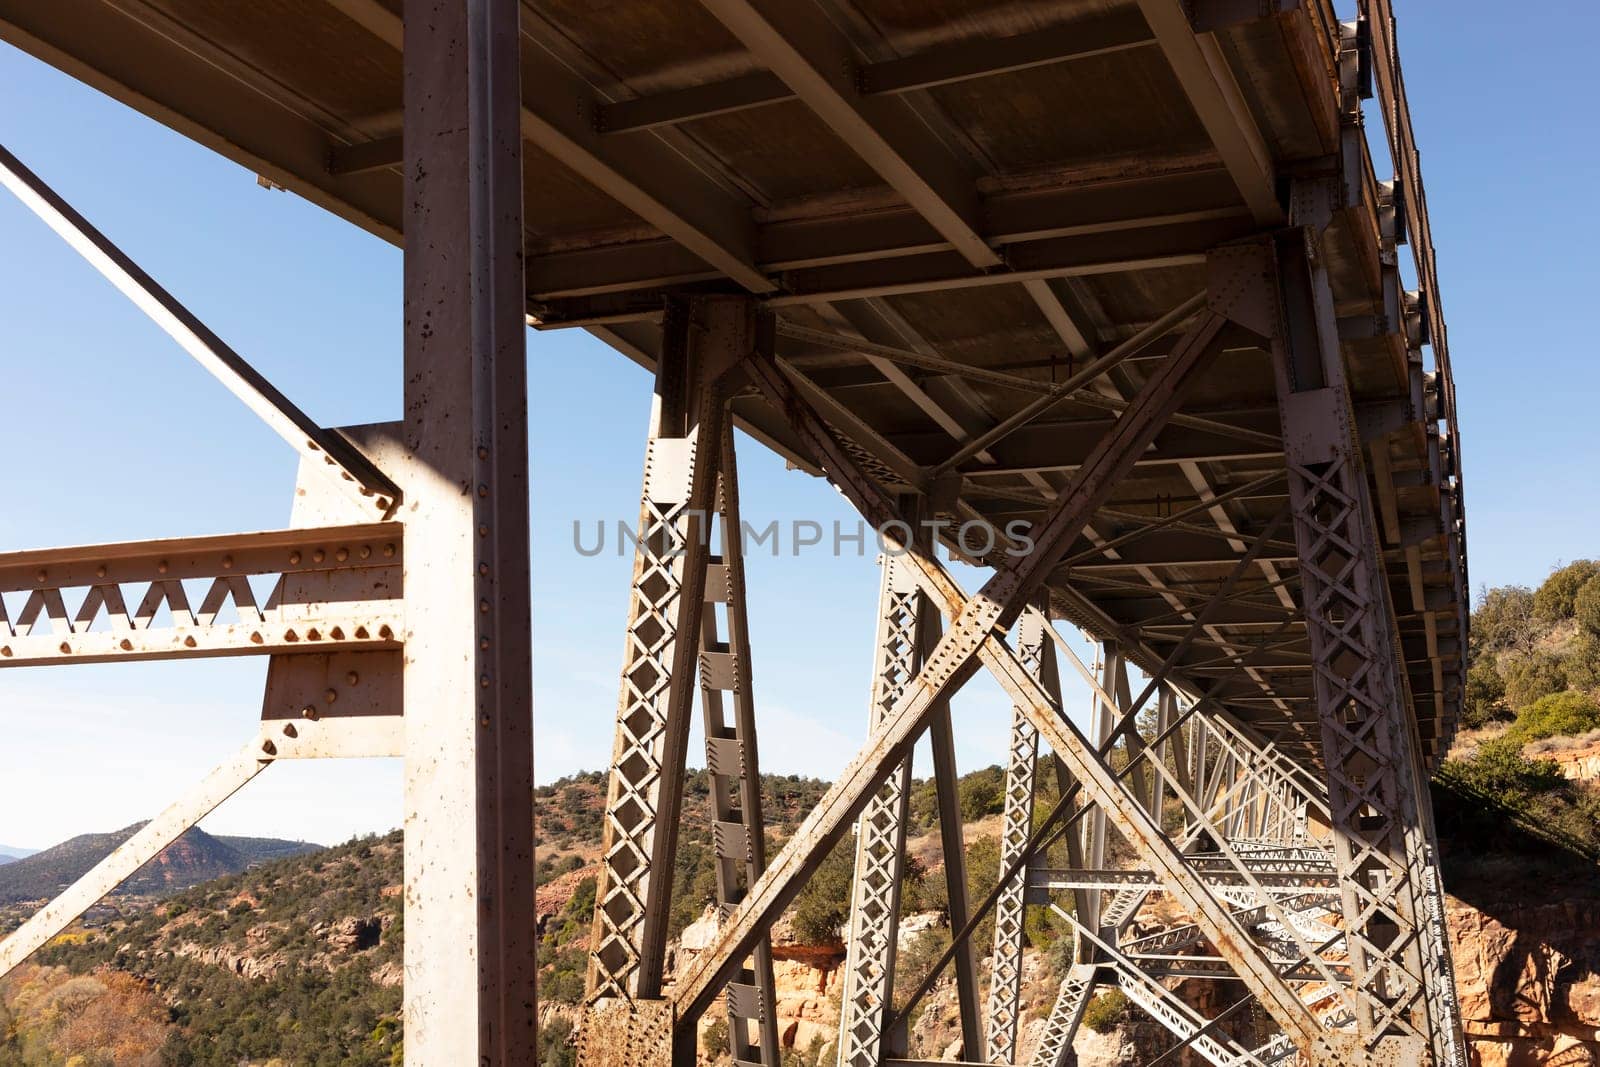 View Beneath Metal Construction Of Bridge Supports Against Blue Sky And Rocks. Rivets And Braces On Metal Beams. Midgley Bridge, Sedona Arizona. Horizontal Plane. Oak Creek Canyon, Coconino County by netatsi